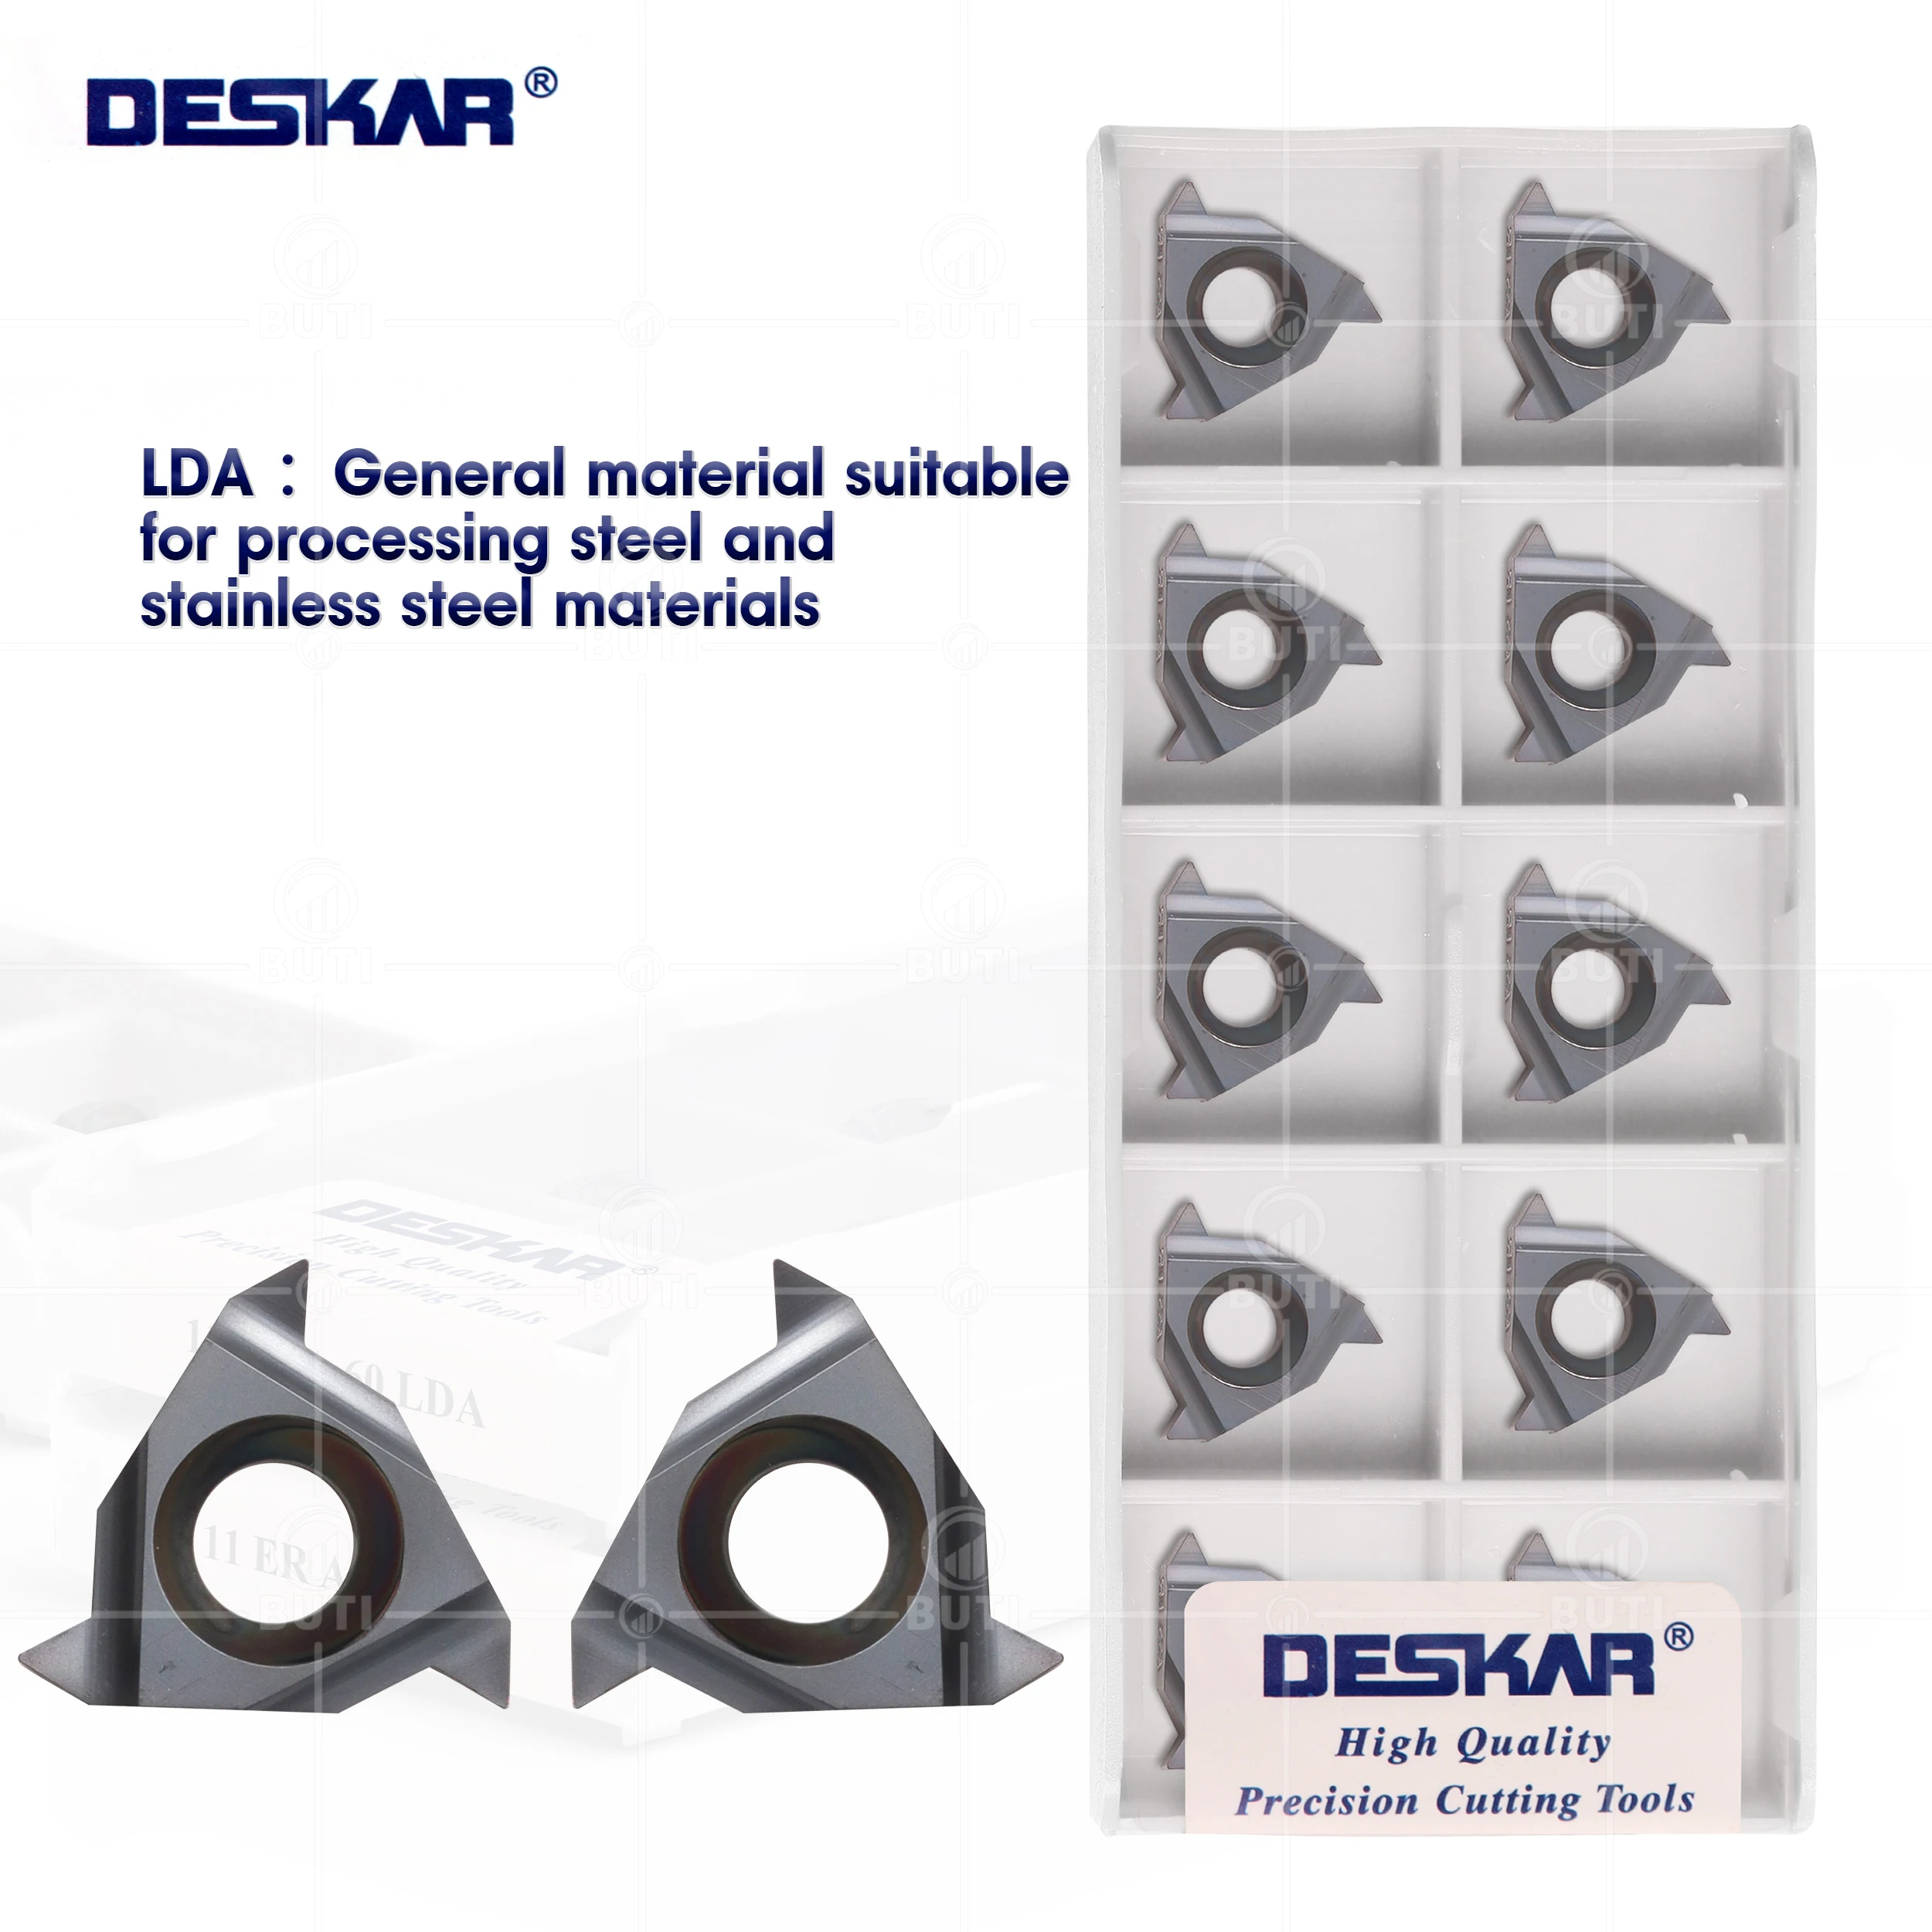 Deskar-超硬旋削,工具,一般材料,100% オリジナル11er a55 a60 14w 16w 19w